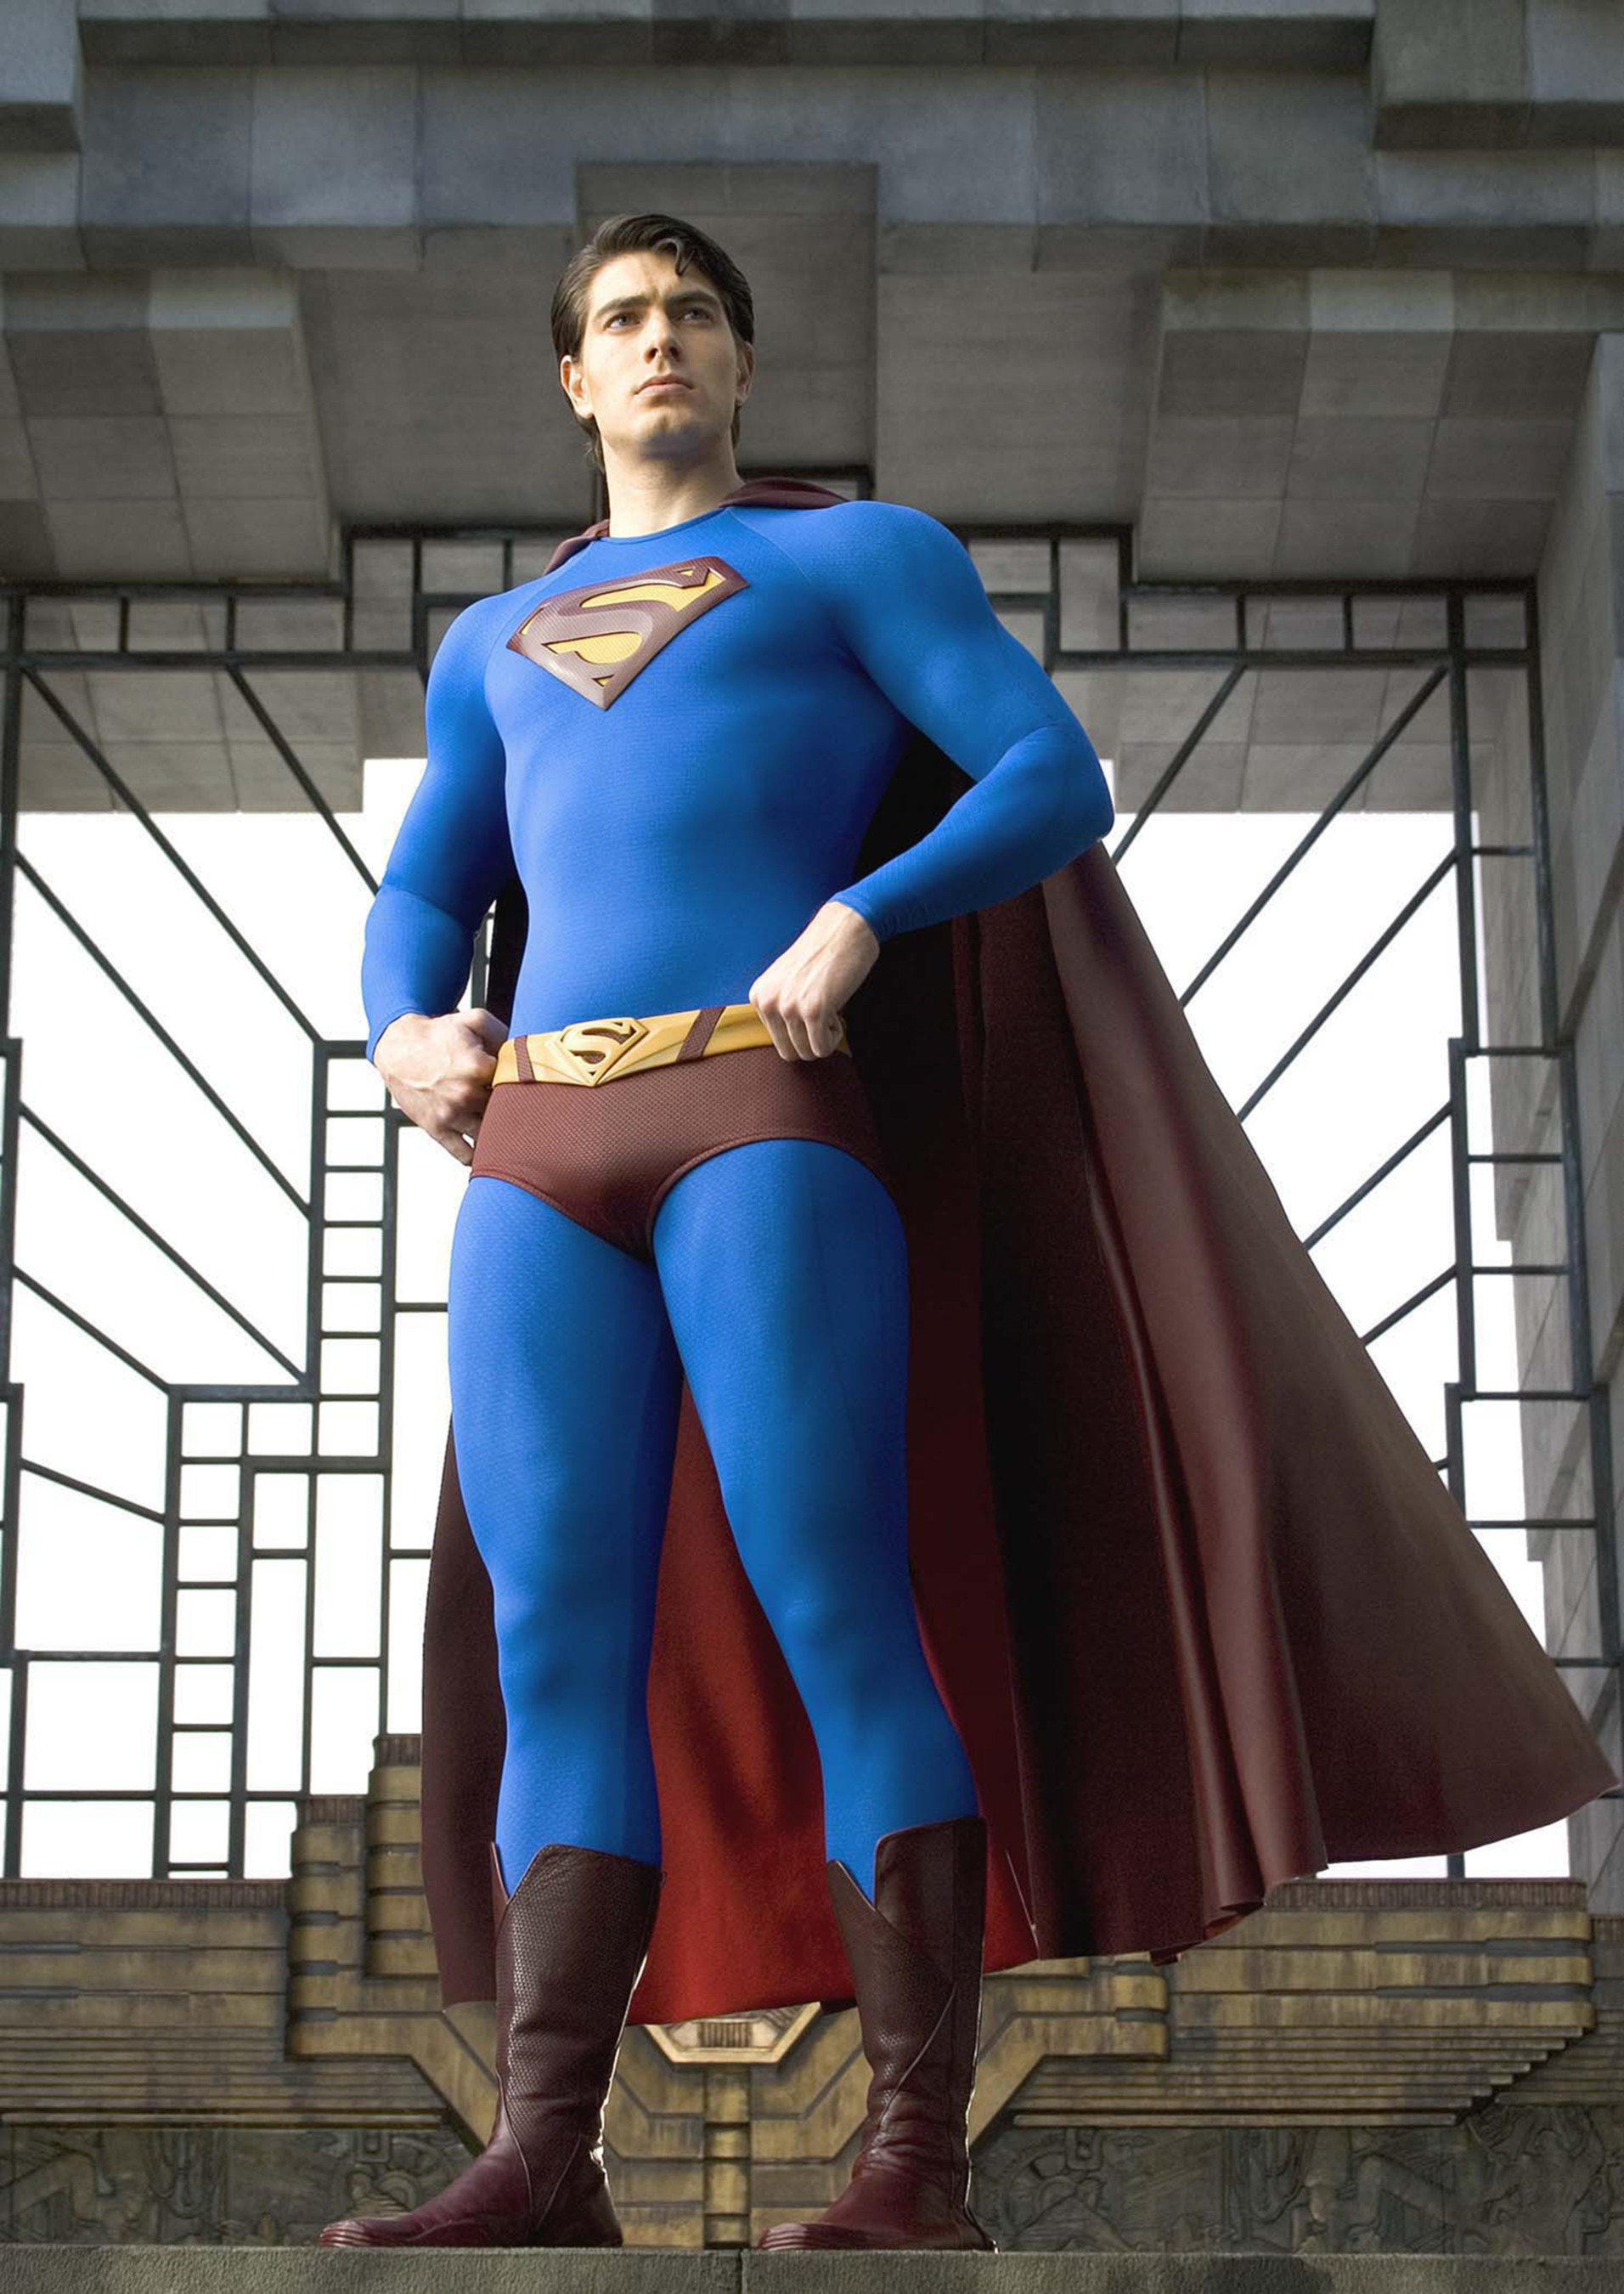 Superman standing on a platform